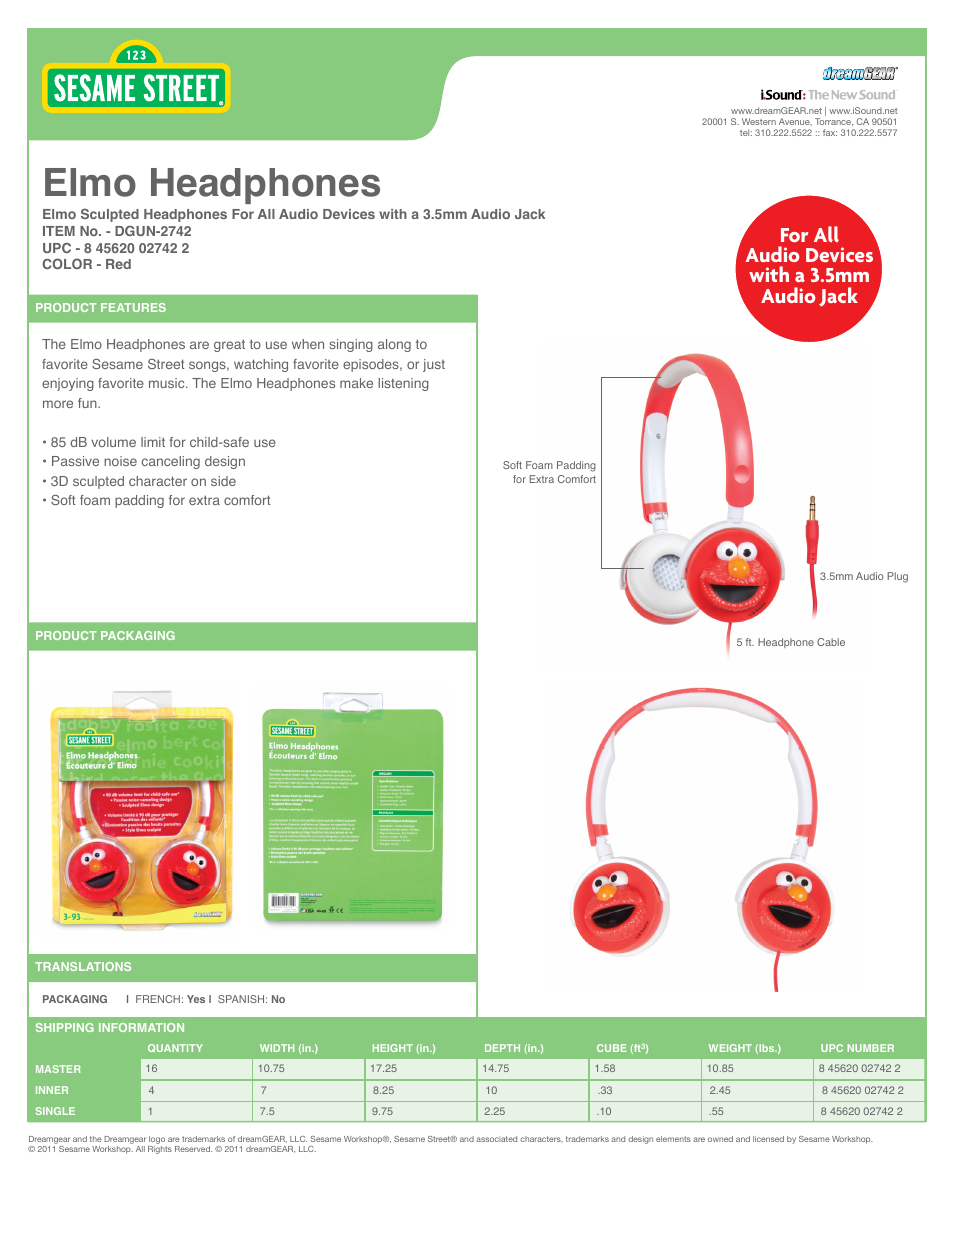 Elmo Headphones - Sell Sheet